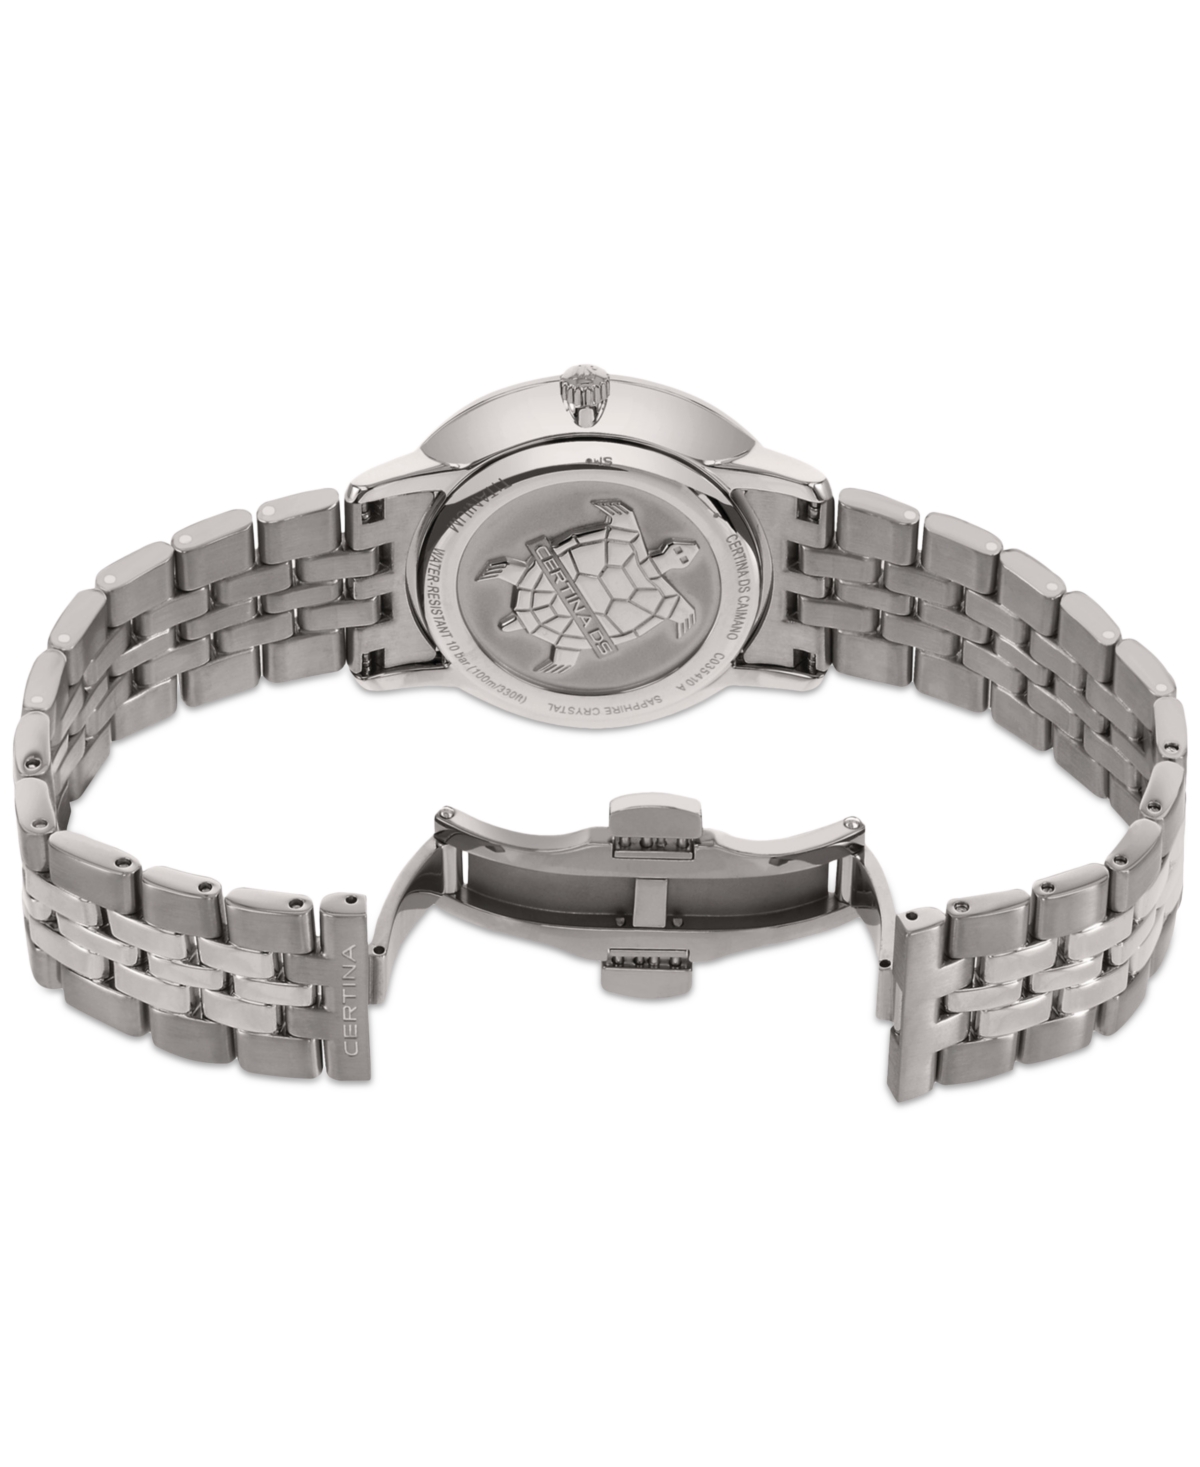 Shop Certina Unisex Swiss Ds Caimano Titanium Bracelet Watch 39mm In Grey